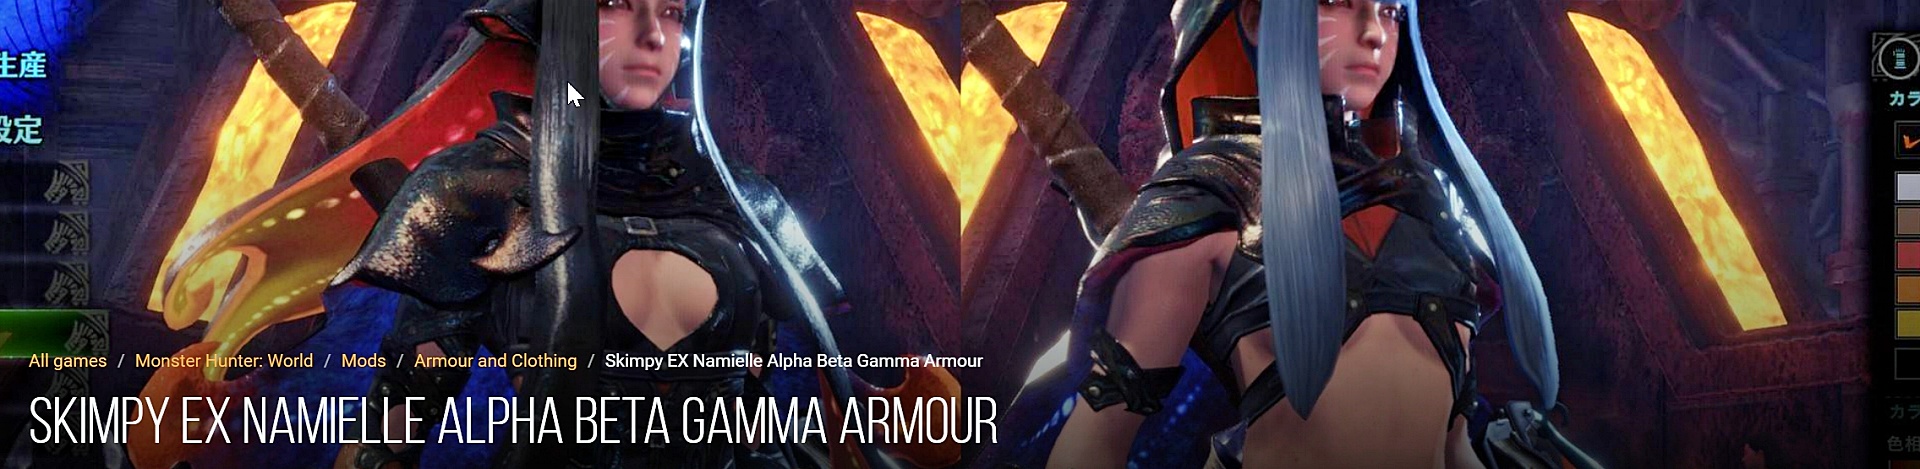 Skimpy EX Namielle Alpha Beta Gamma Armour